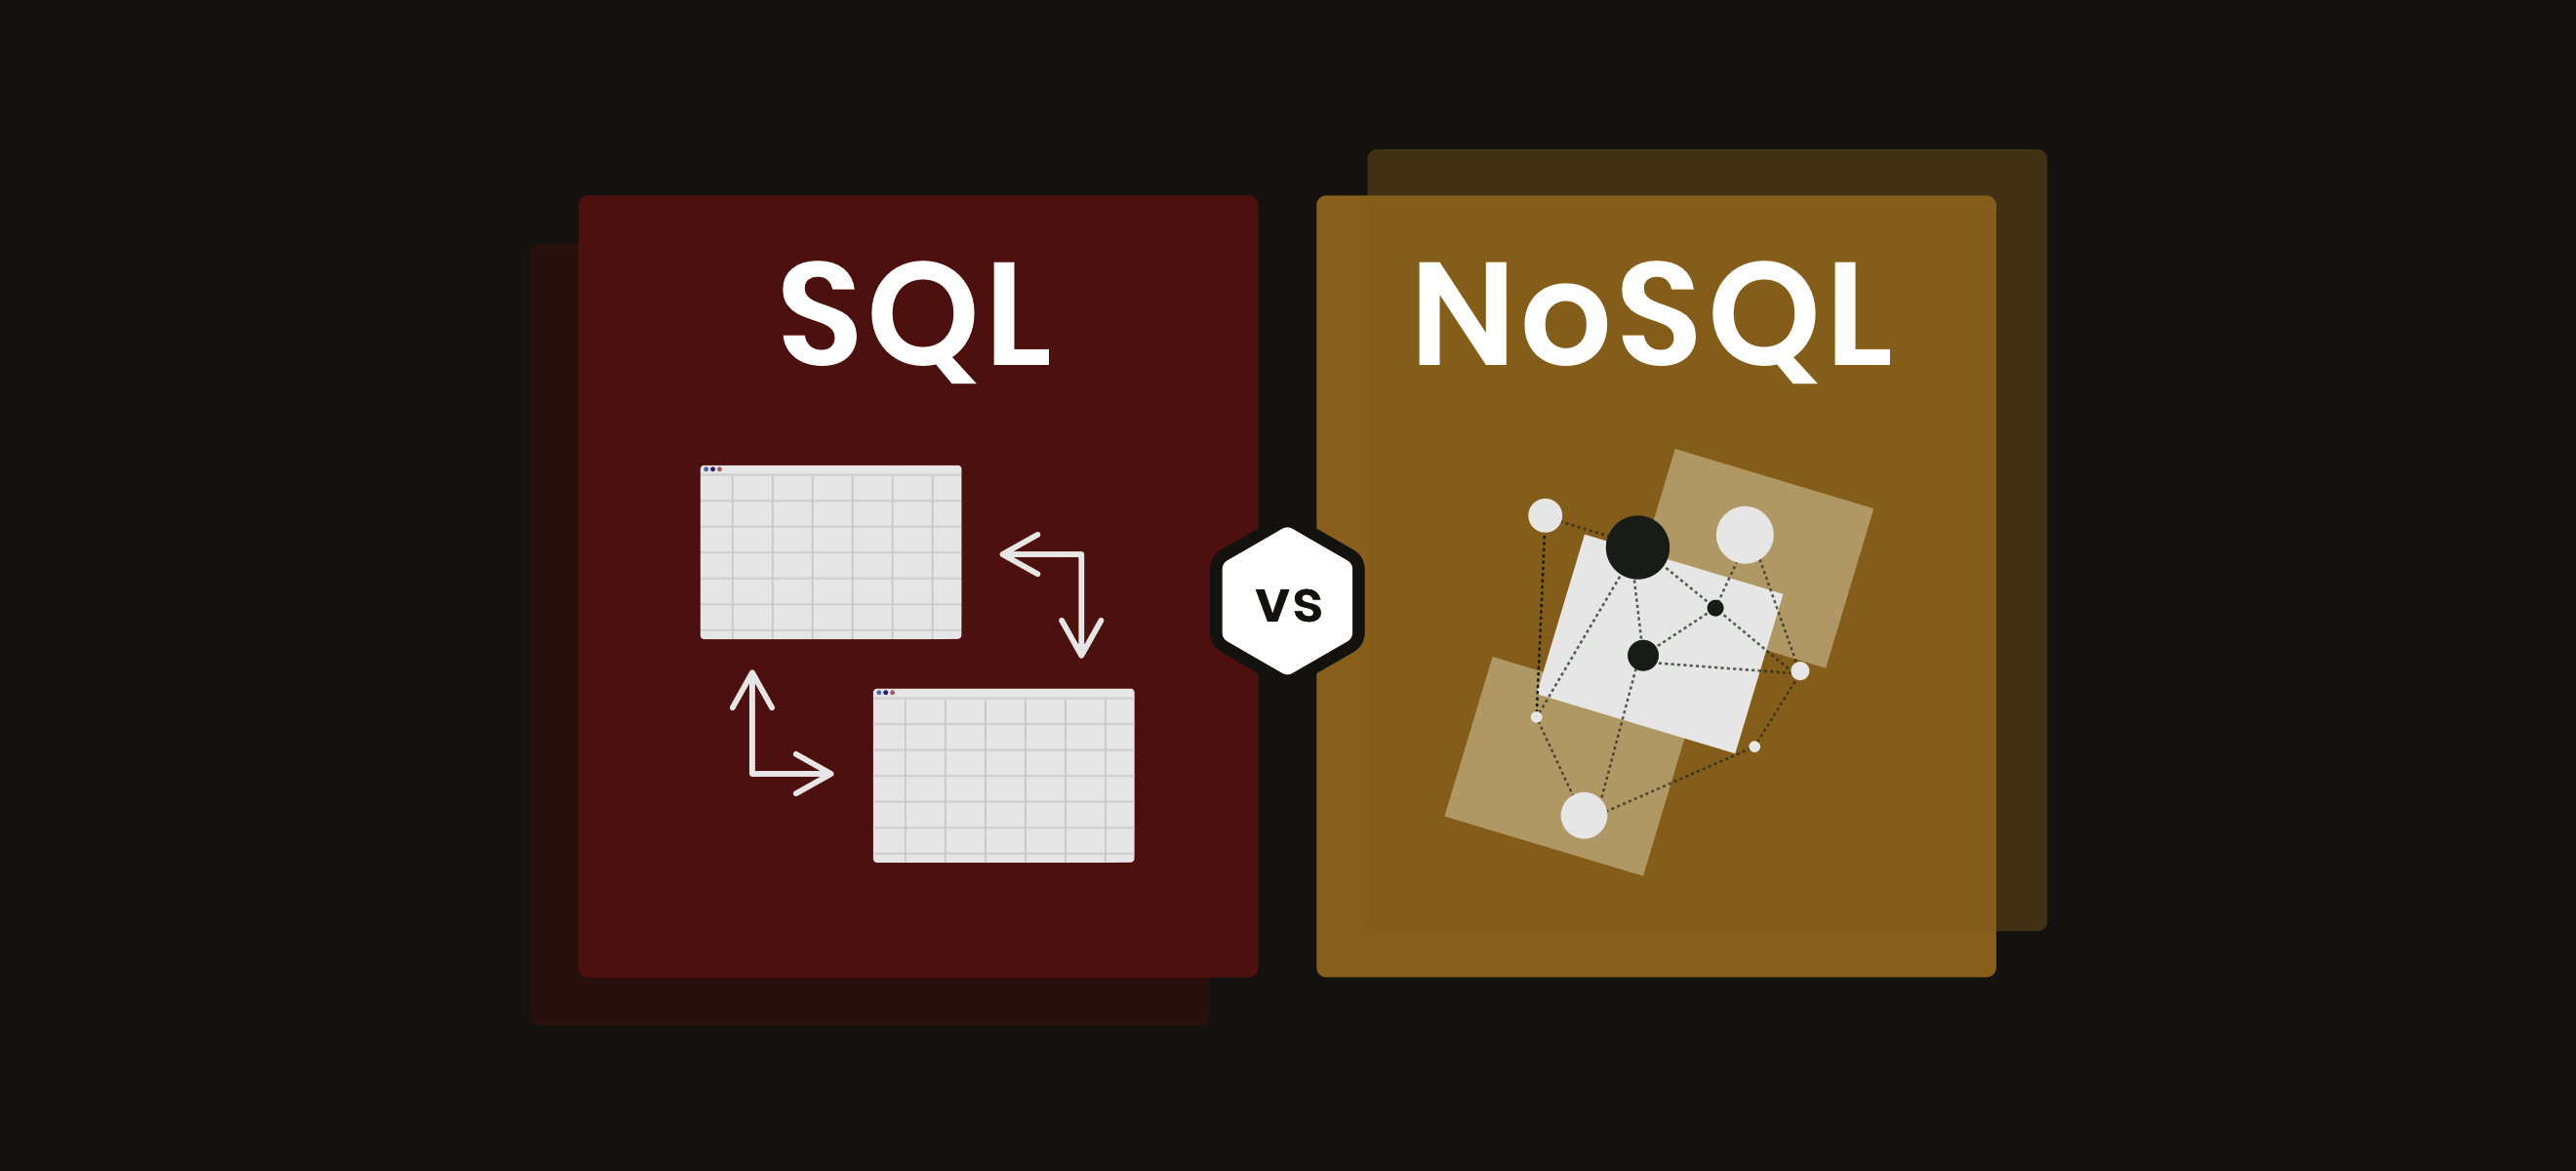 SQL-versus-NOSQL